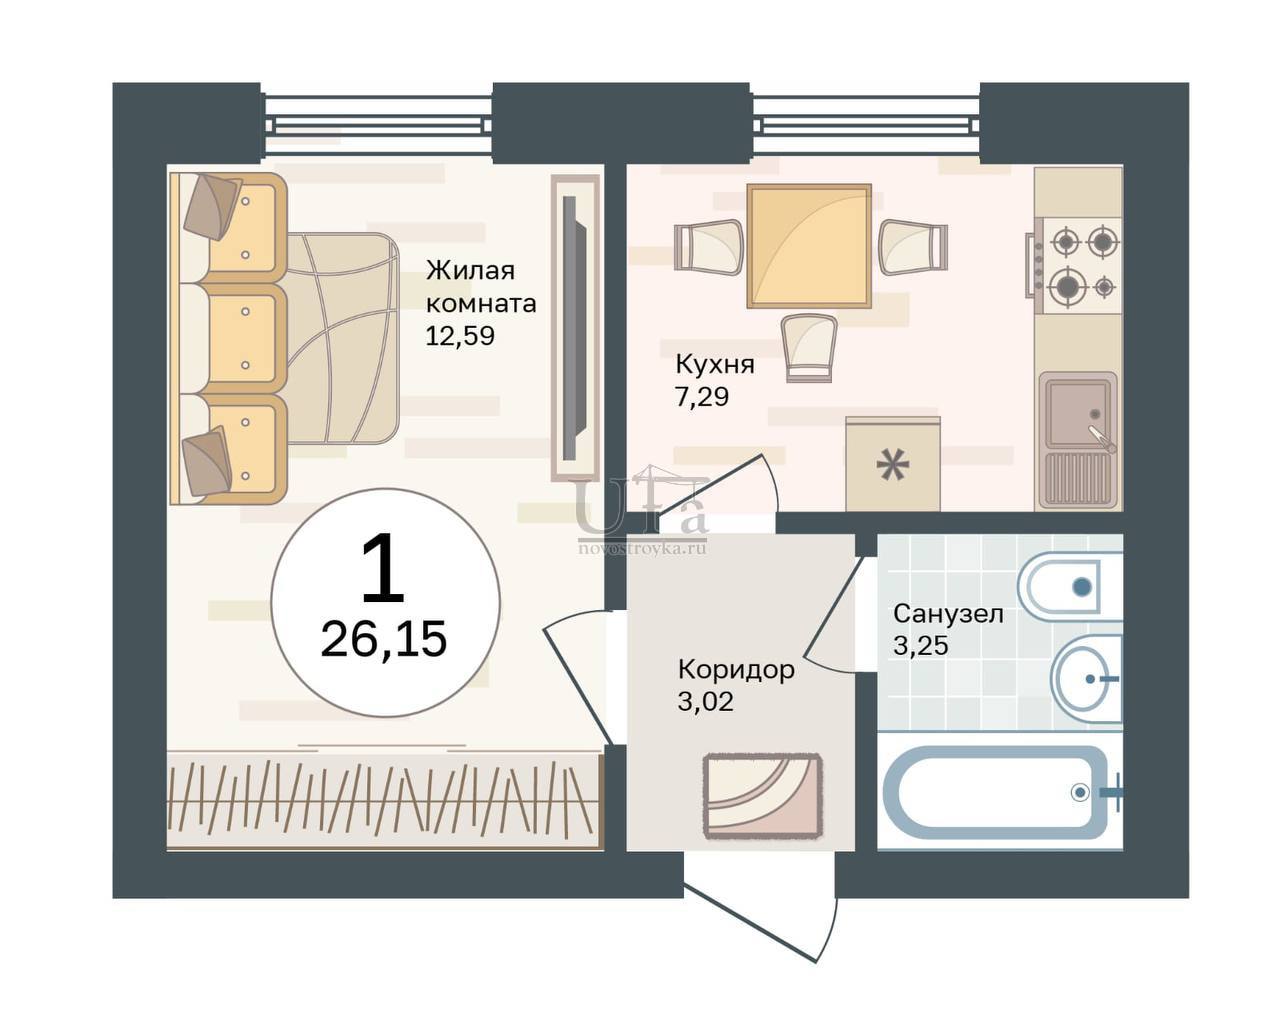 Как из 1-комнатной квартиры сделать 2-комнатную?